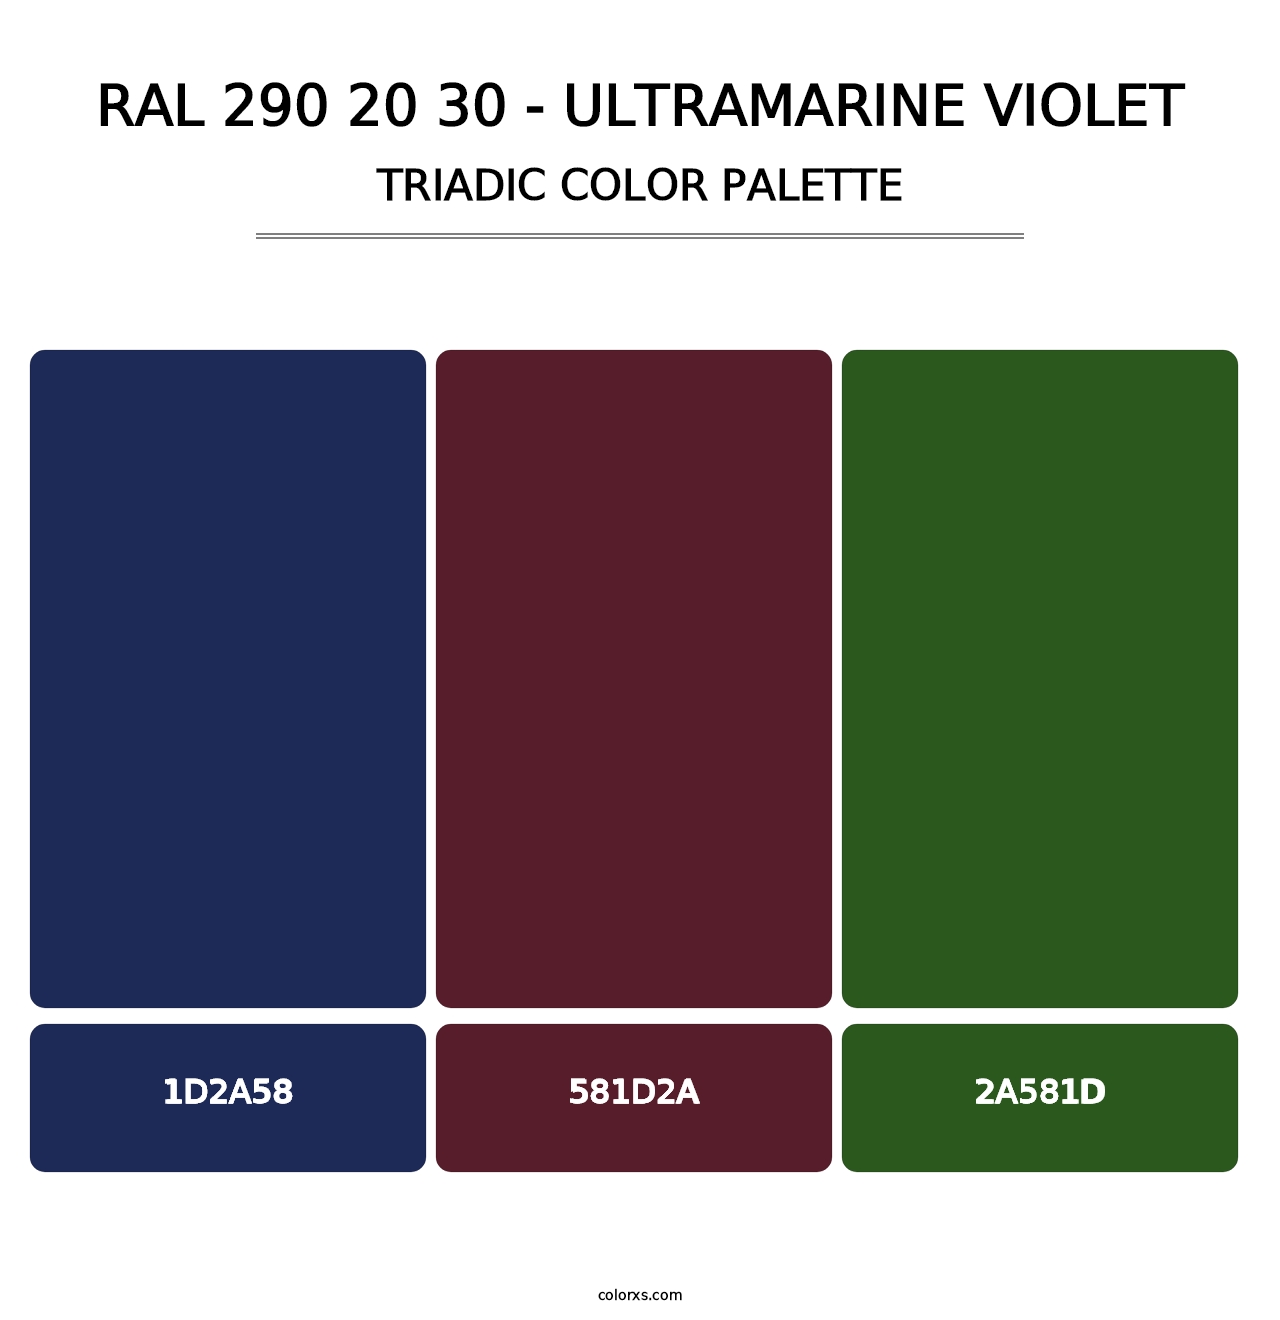 RAL 290 20 30 - Ultramarine Violet - Triadic Color Palette